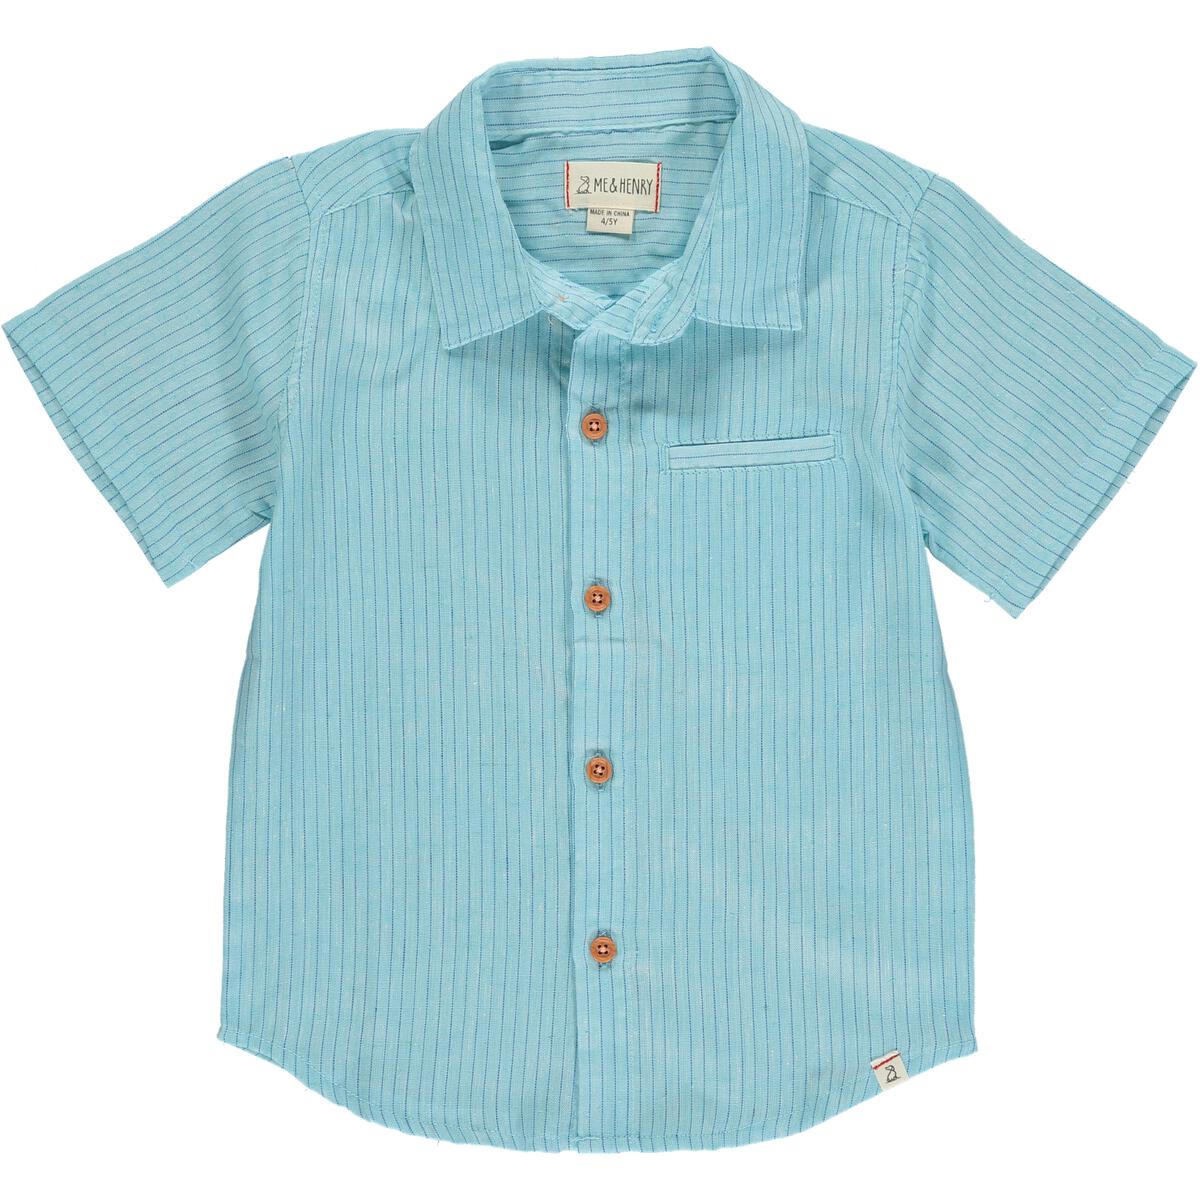 Newport Aqua/Royal Blue Stripe Woven Shirt